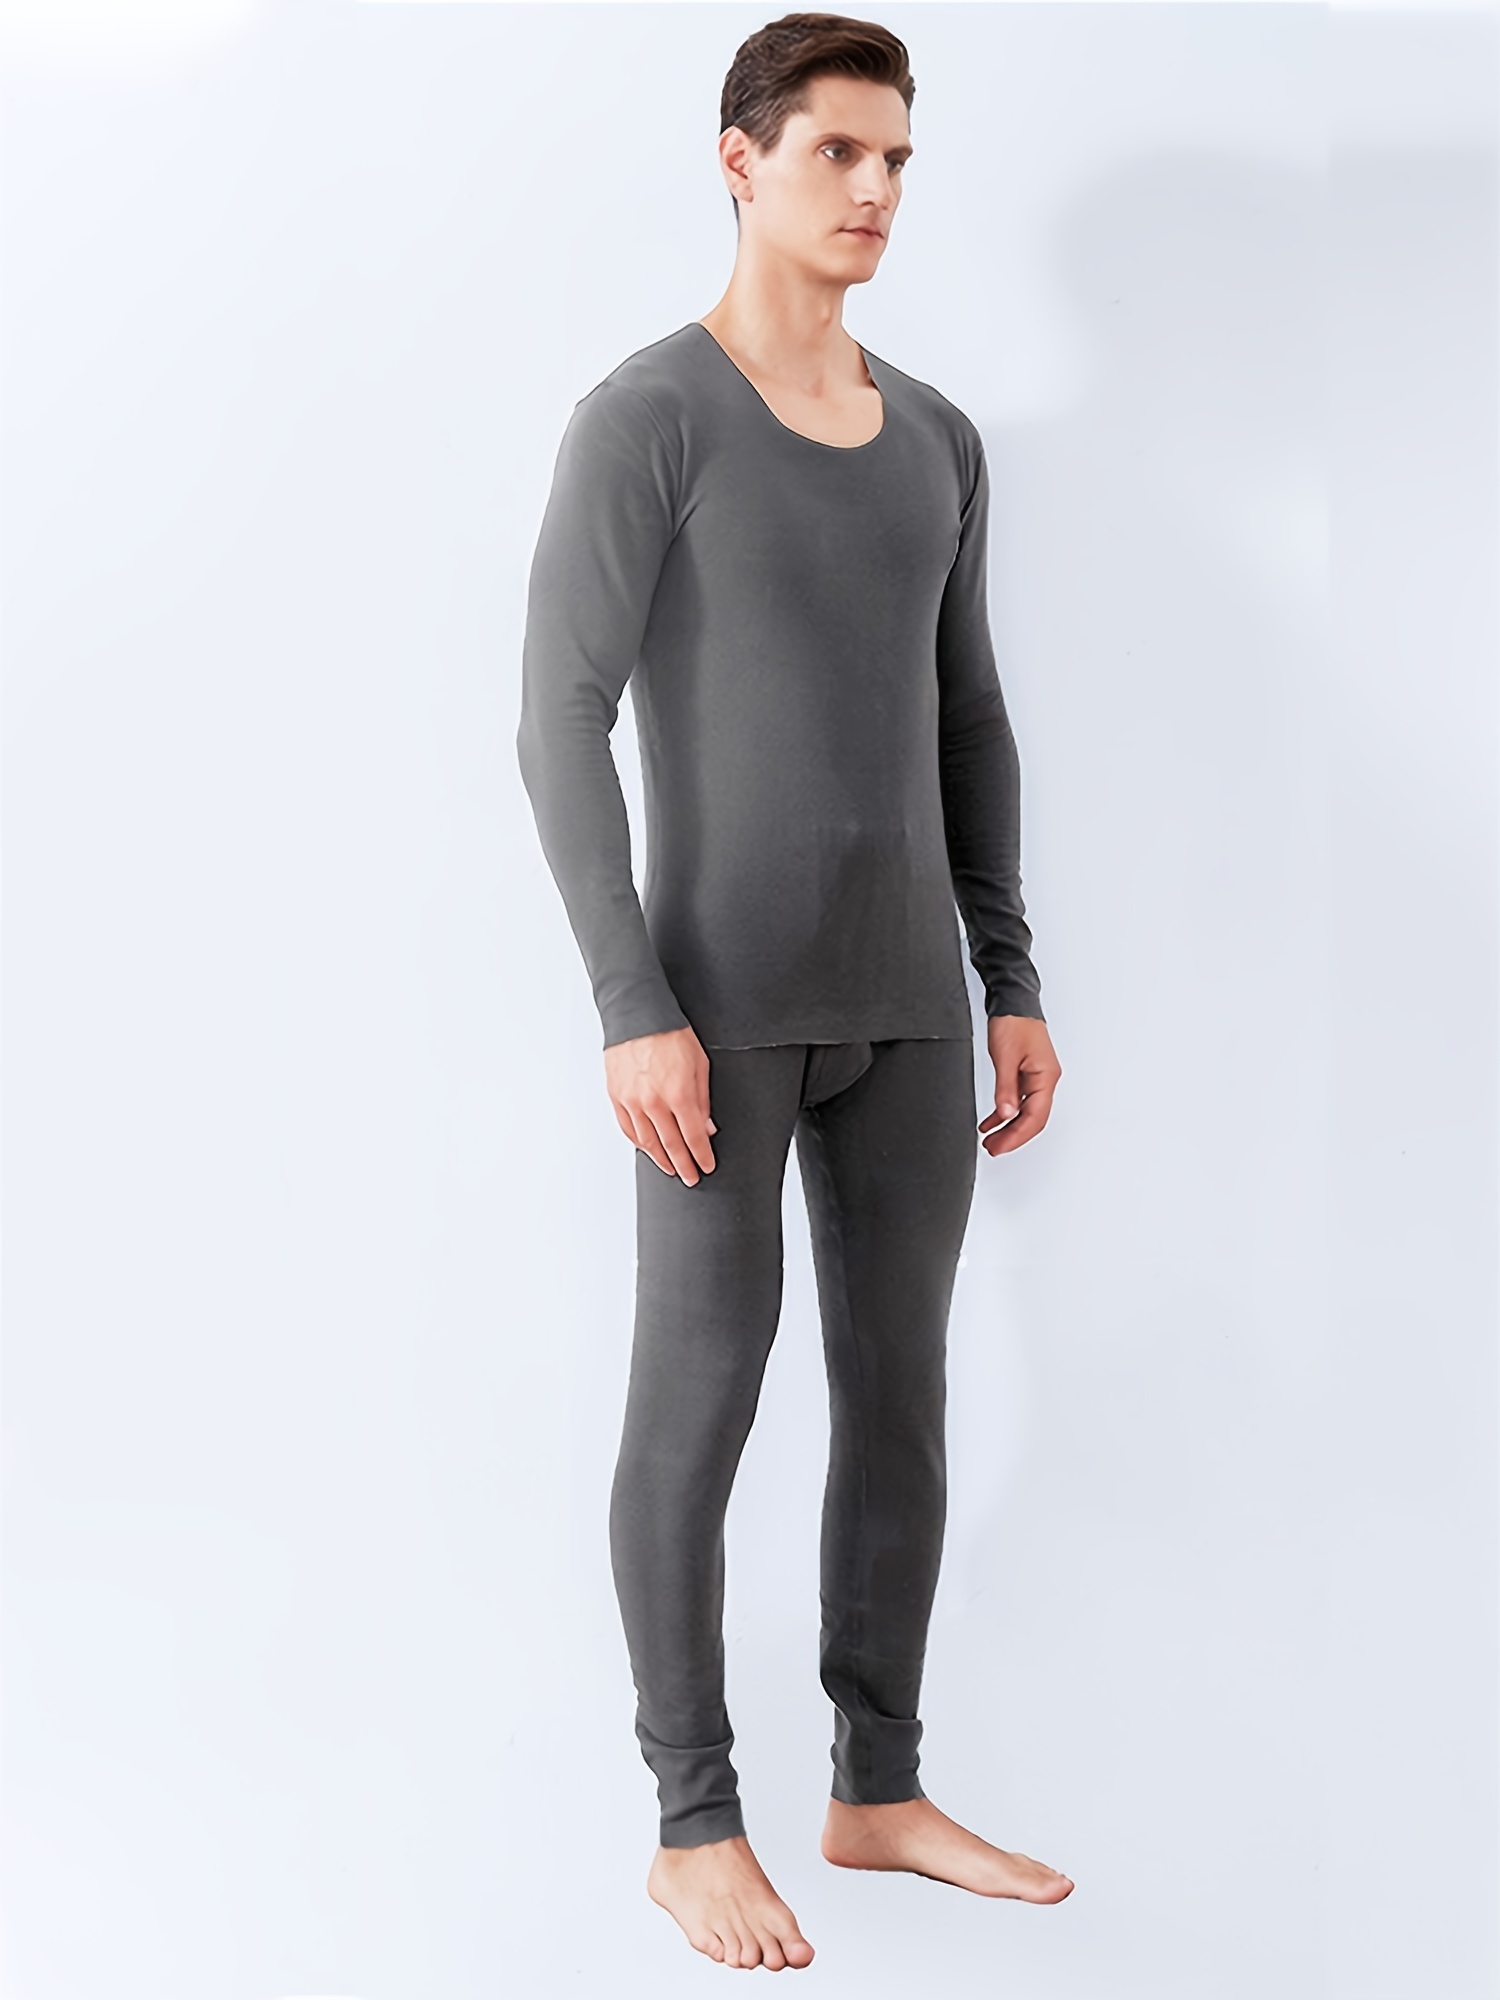 Men's Thermal Fleece Underwear Set, Warm, Flexible, Ultra Soft And ...